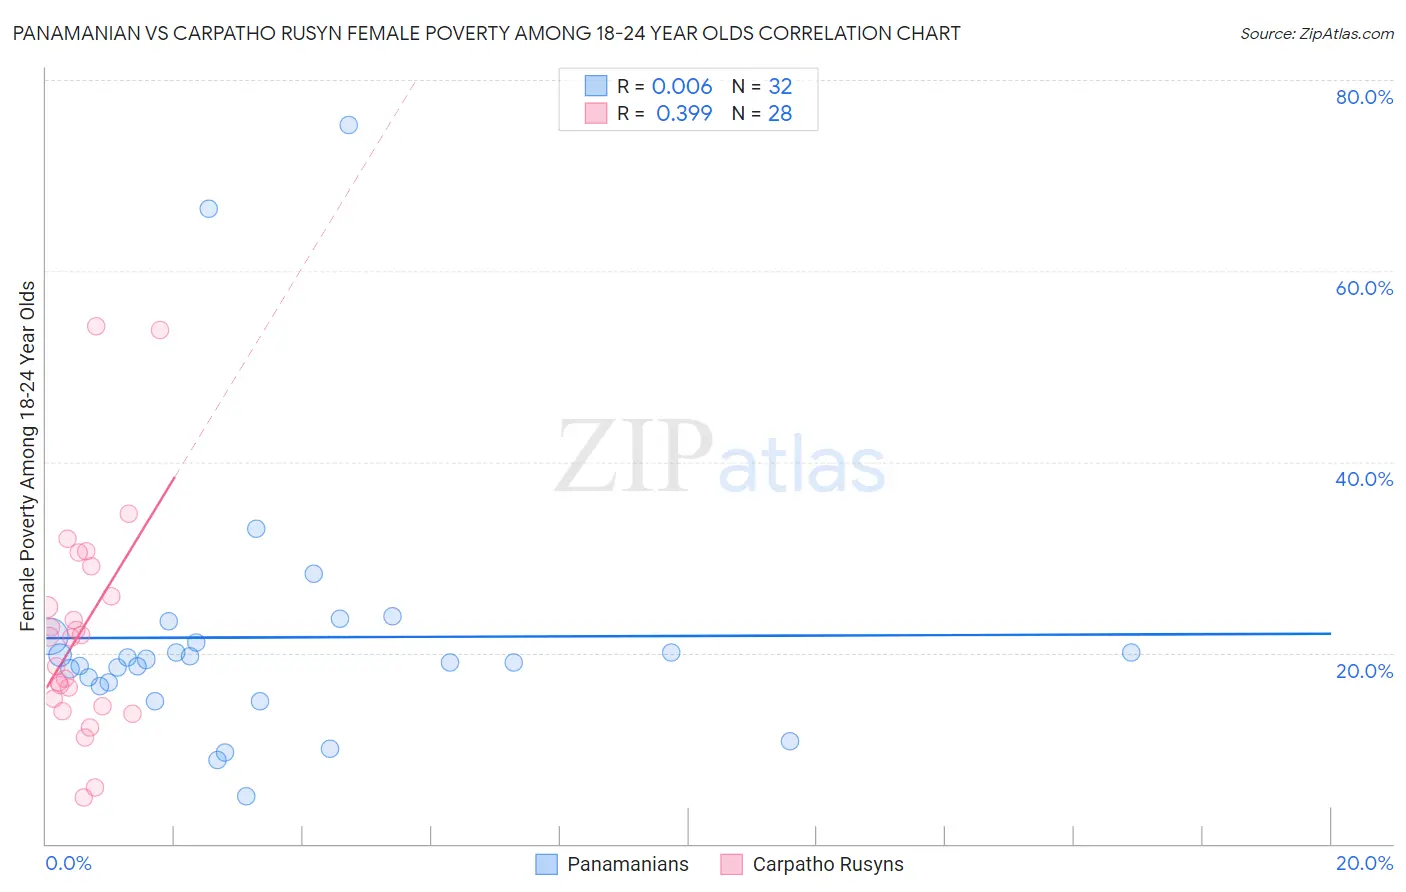 Panamanian vs Carpatho Rusyn Female Poverty Among 18-24 Year Olds